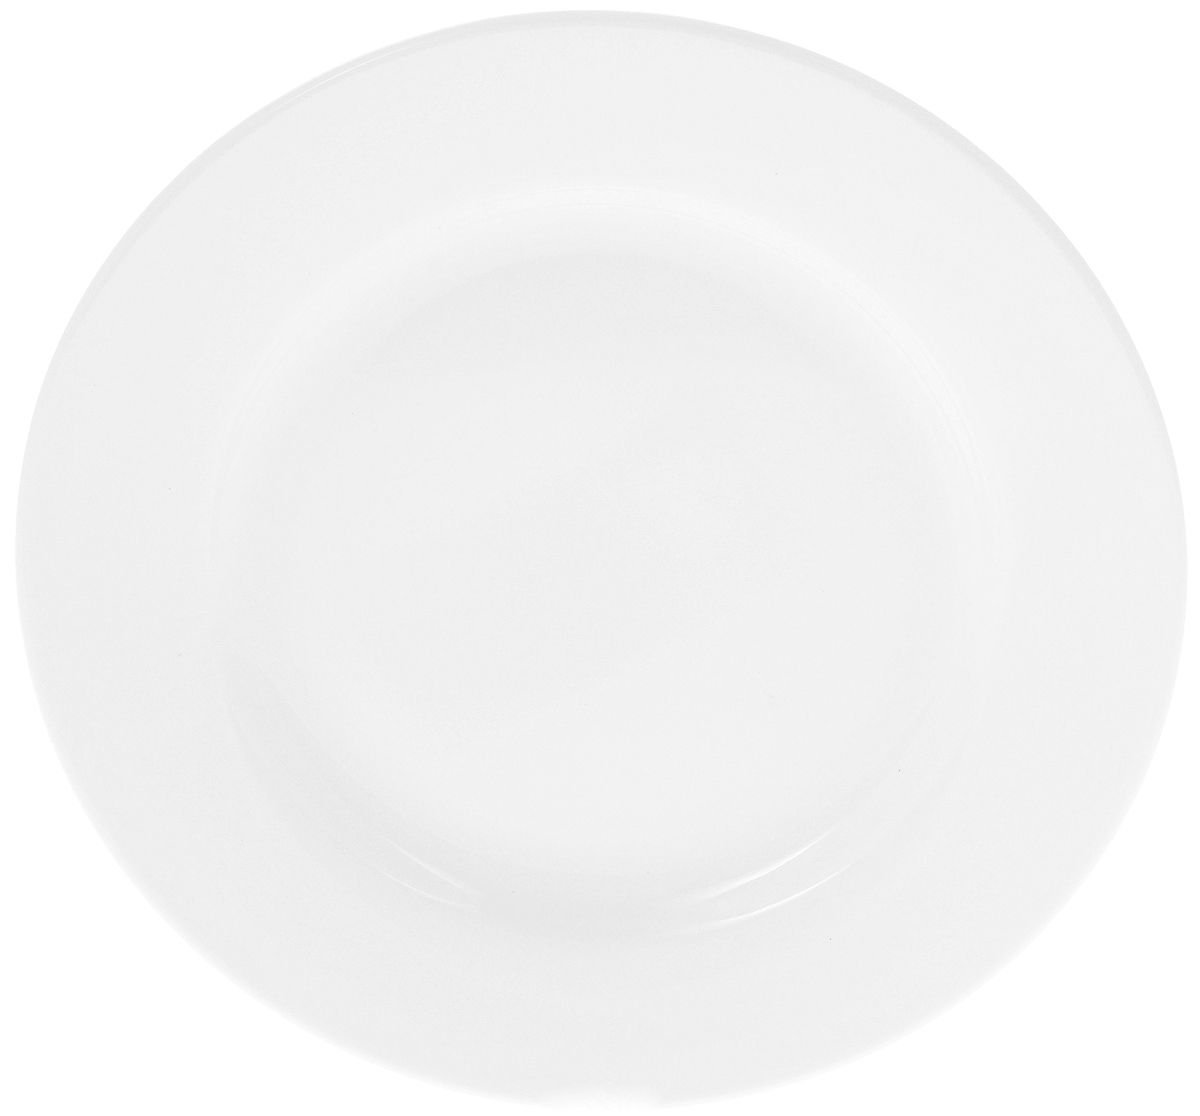 Wilmax Fine Porcelain Professional Rolled Rim White Bread Plate 6" | 15 Cm WL-991176/A